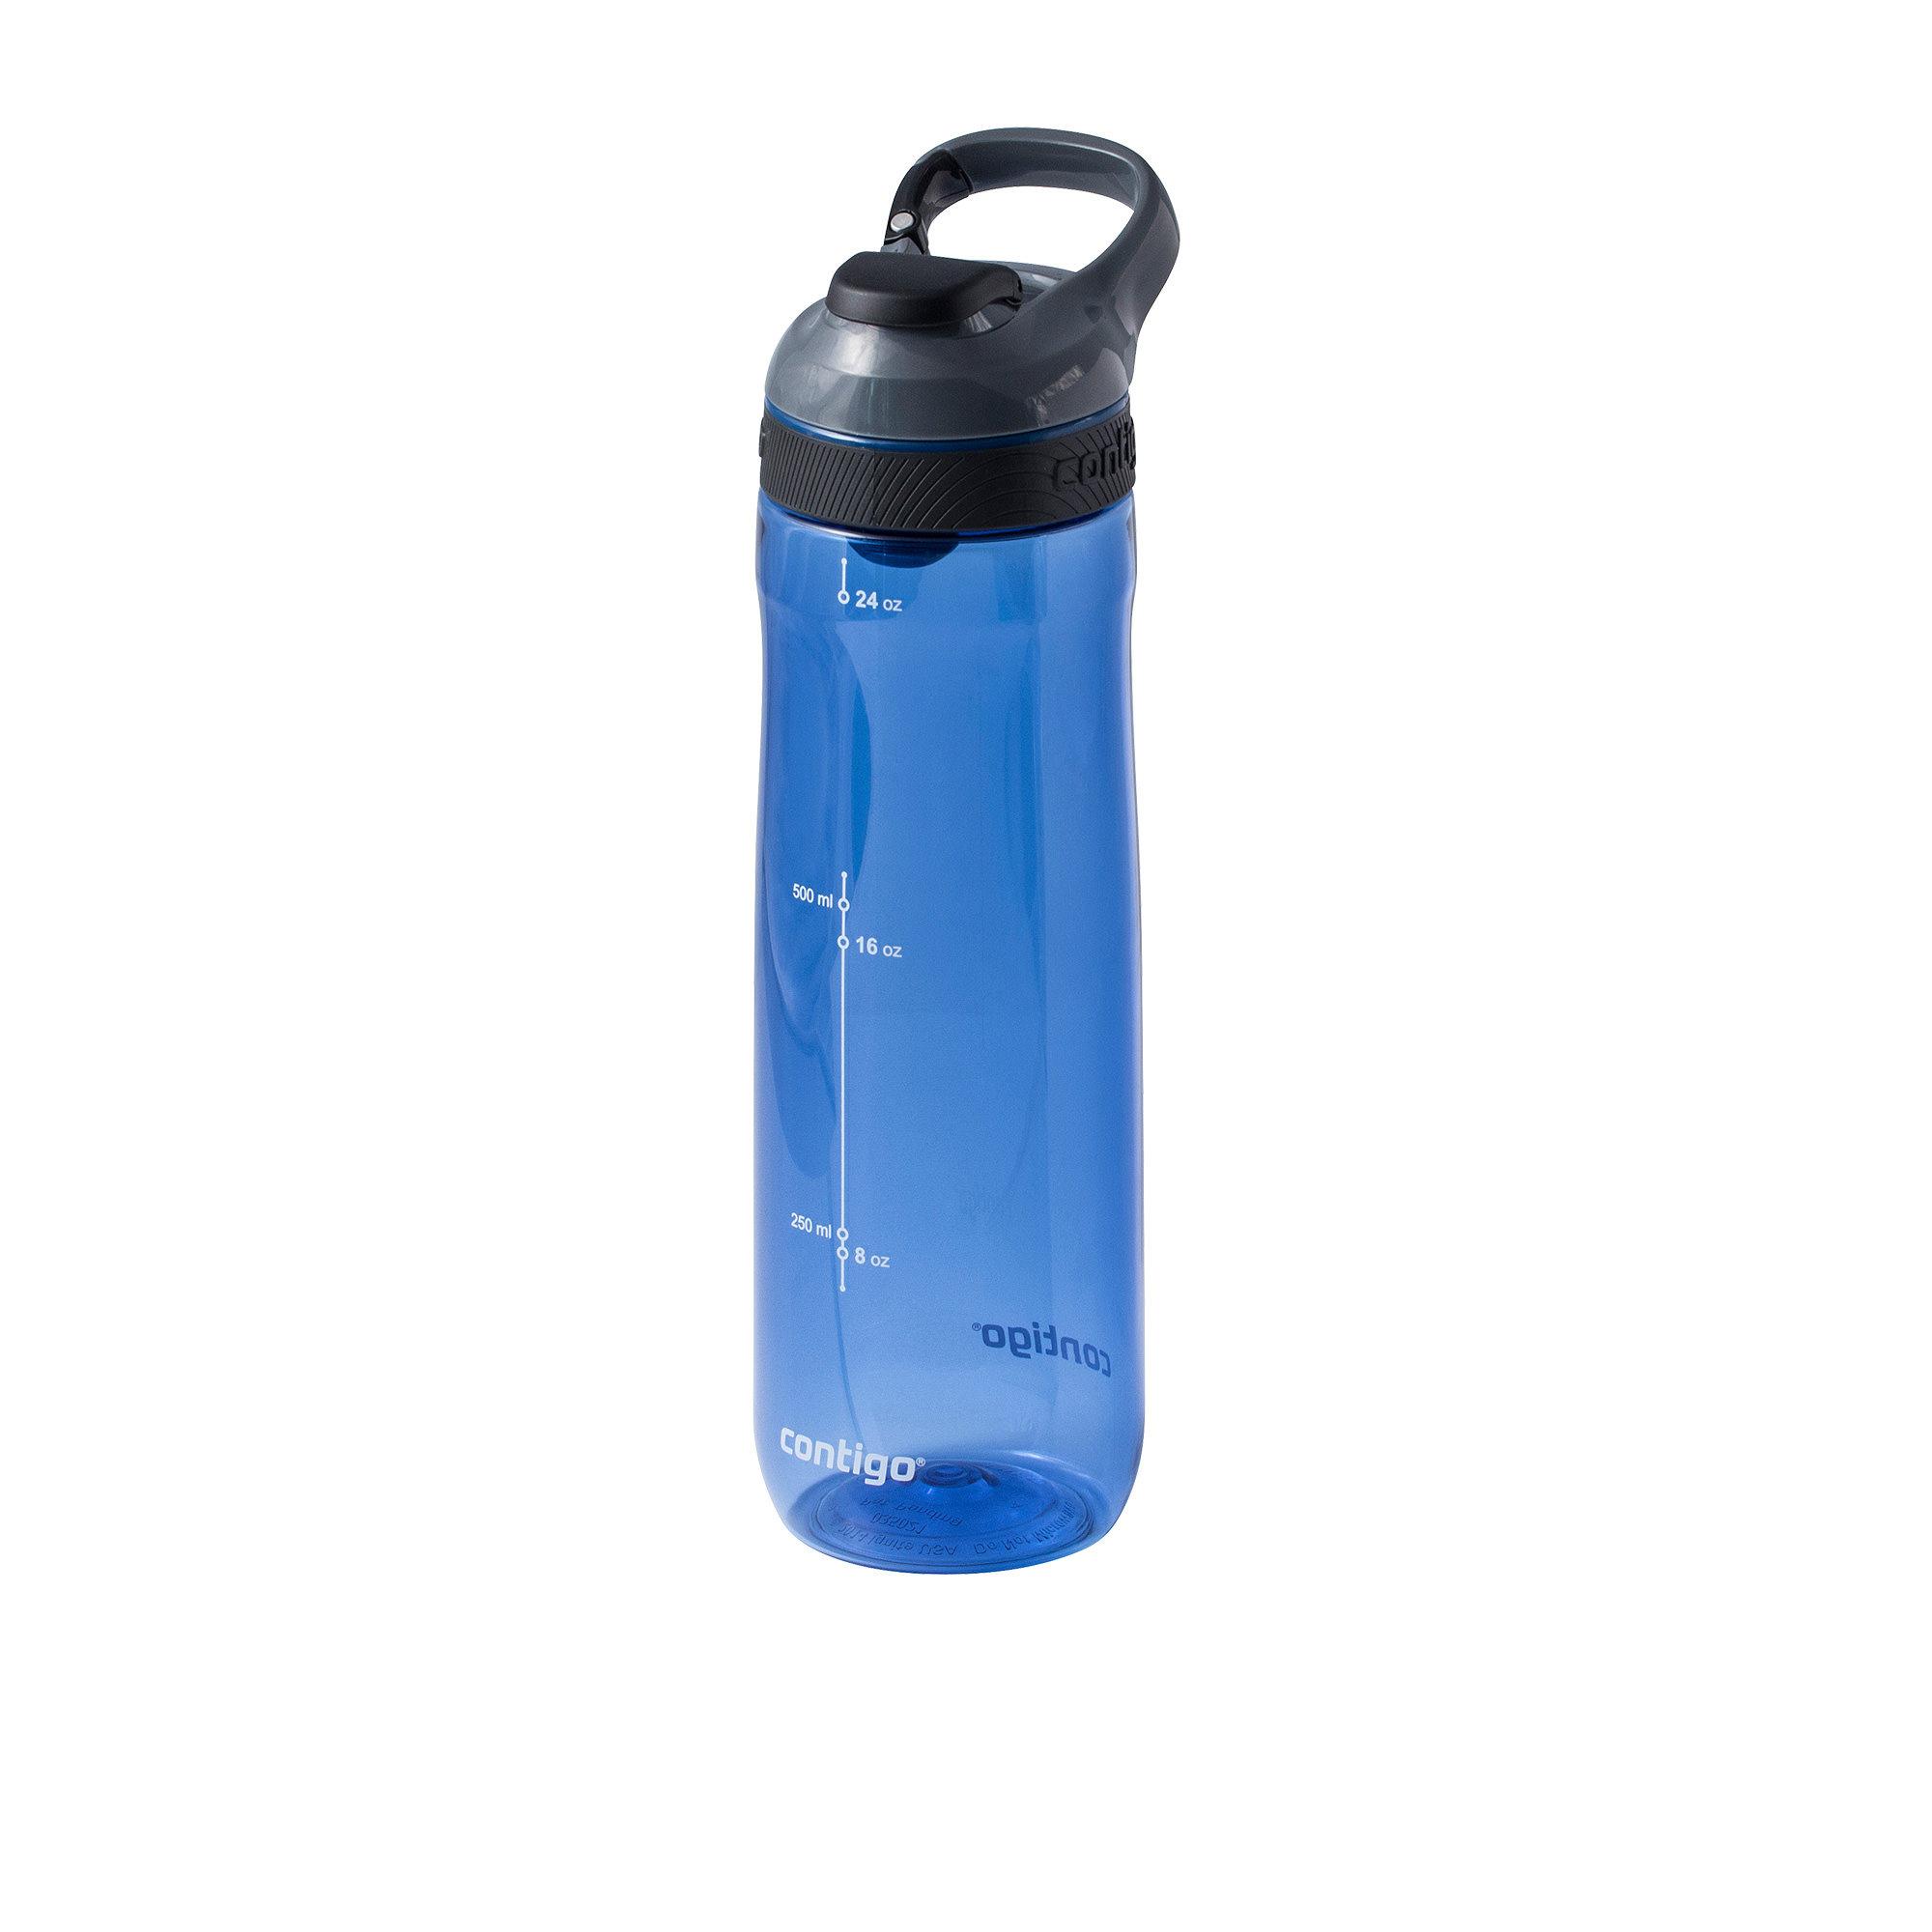 Contigo Cortland Autoseal Water Bottle 720ml Monaco Blue Image 1